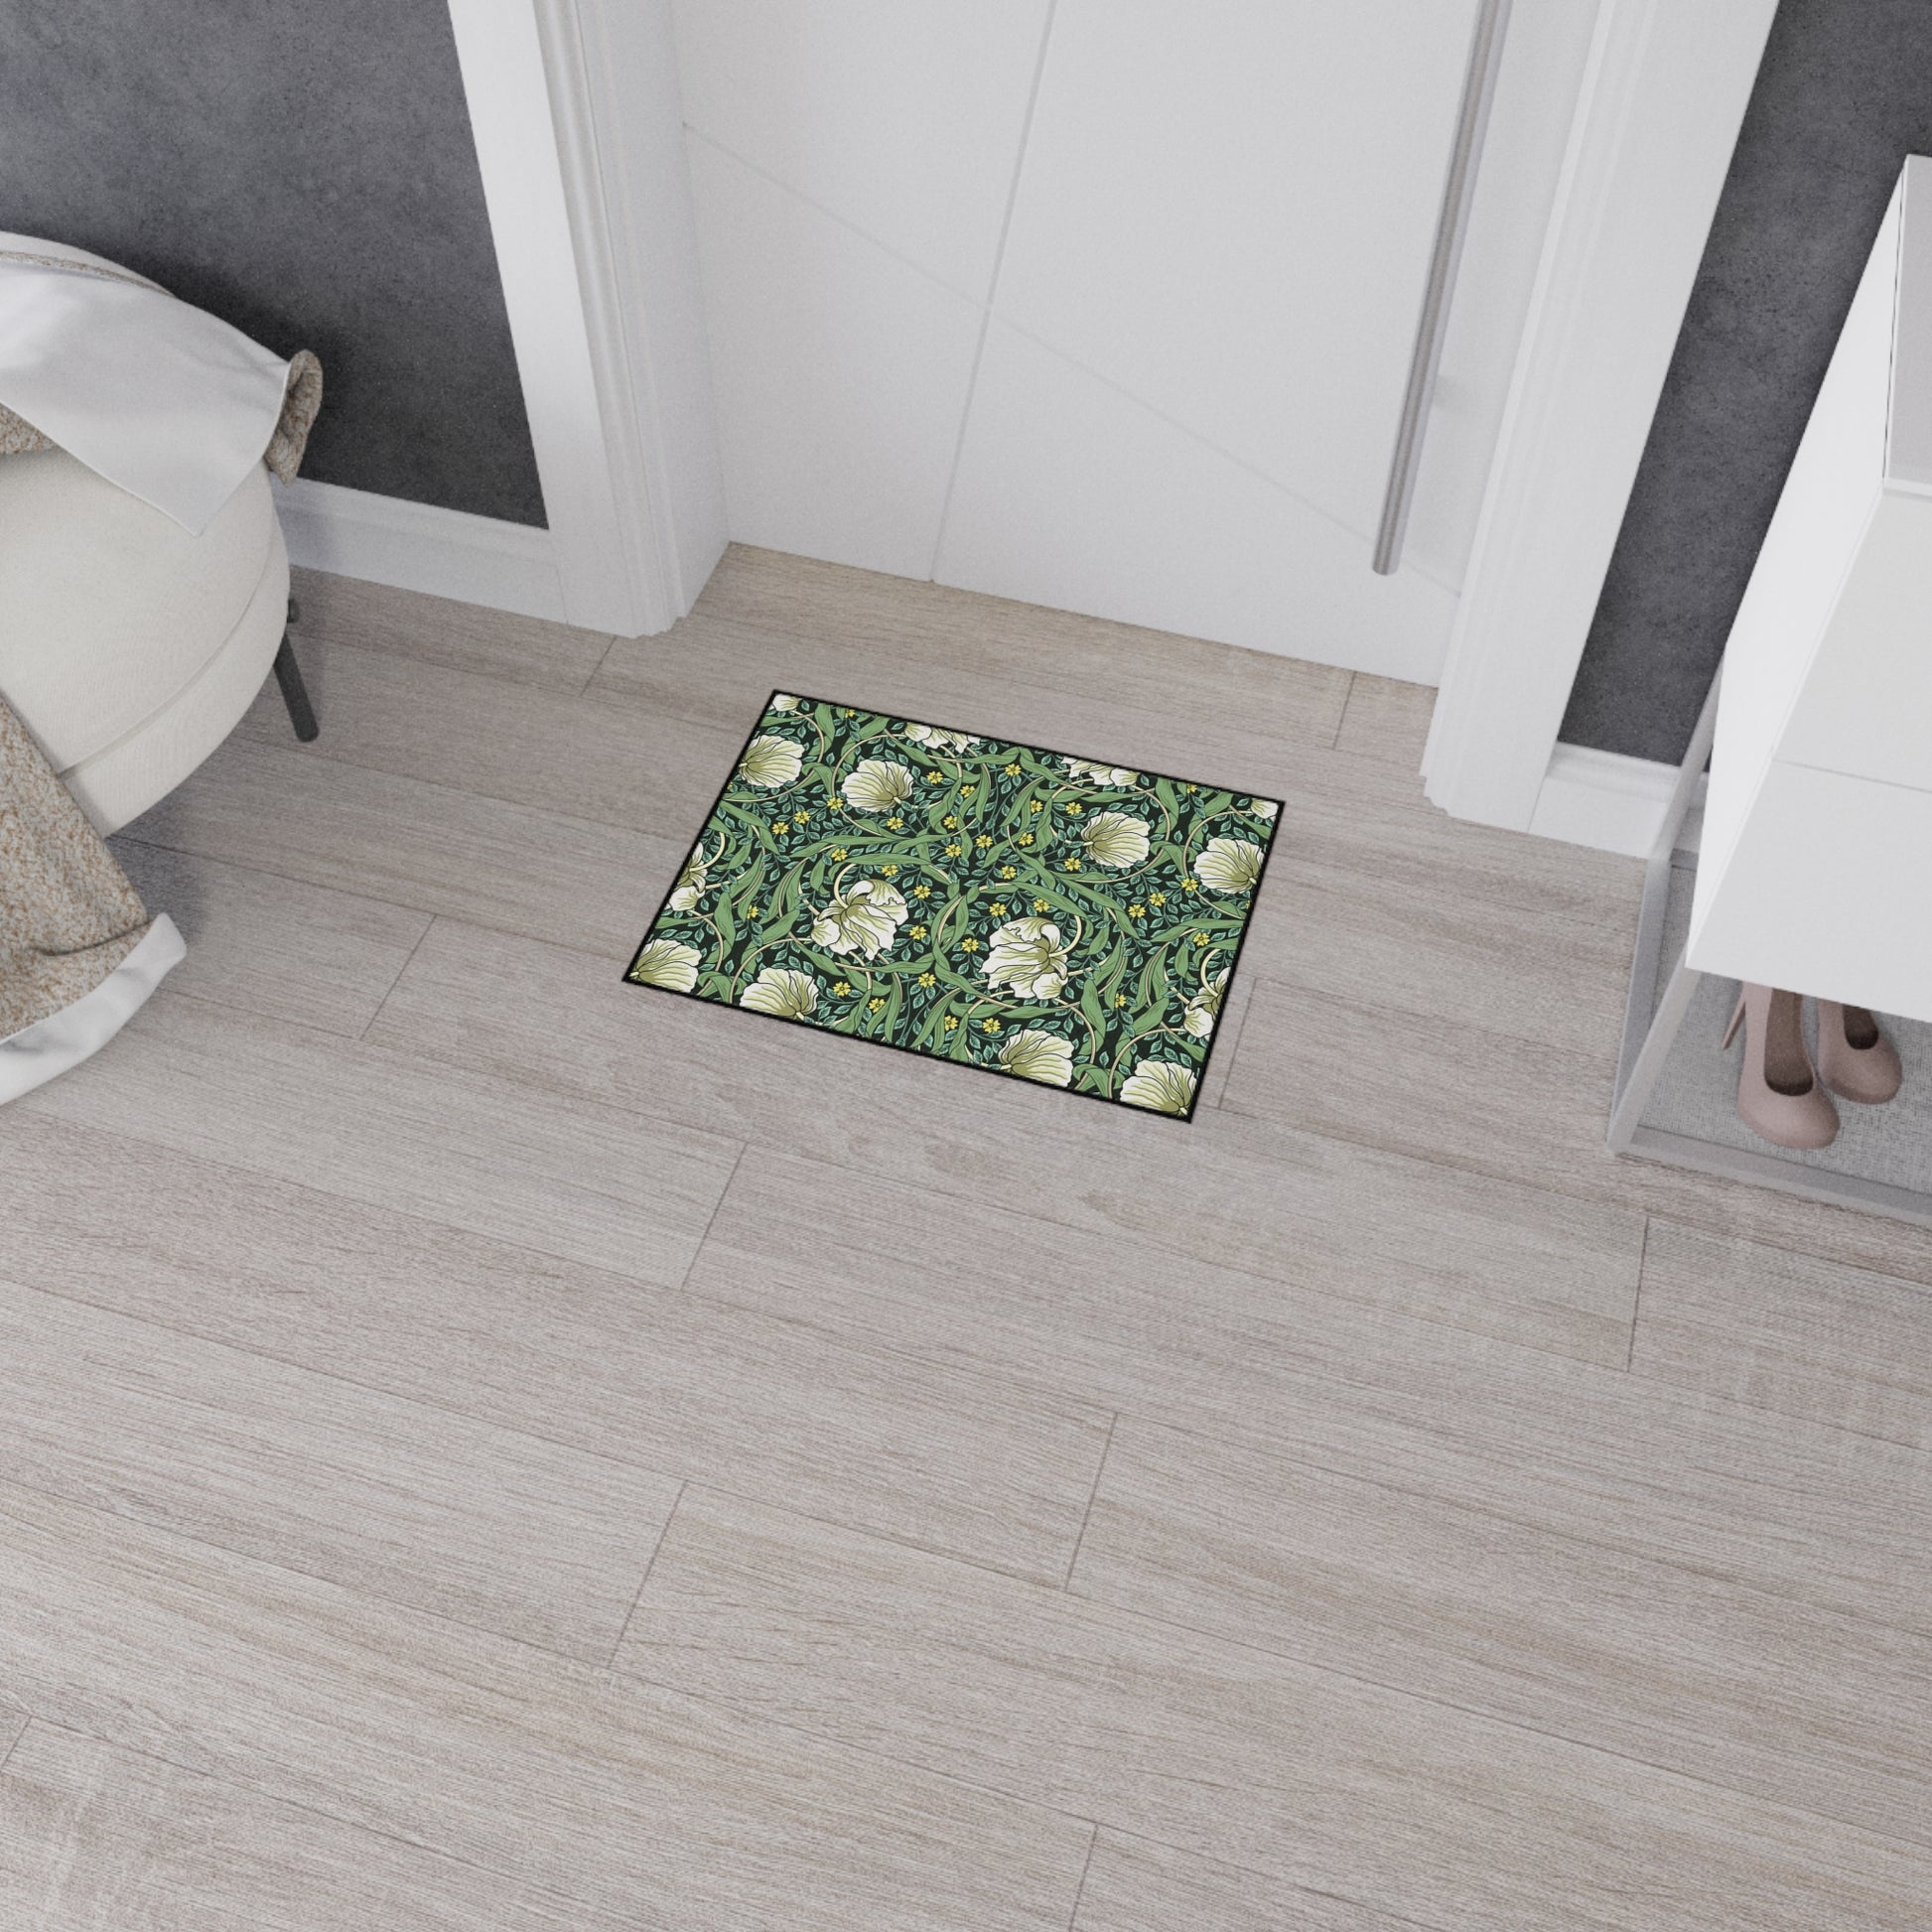 william-morris-co-heavy-duty-floor-mat-floor-mat-pimpernel-collection-green-21